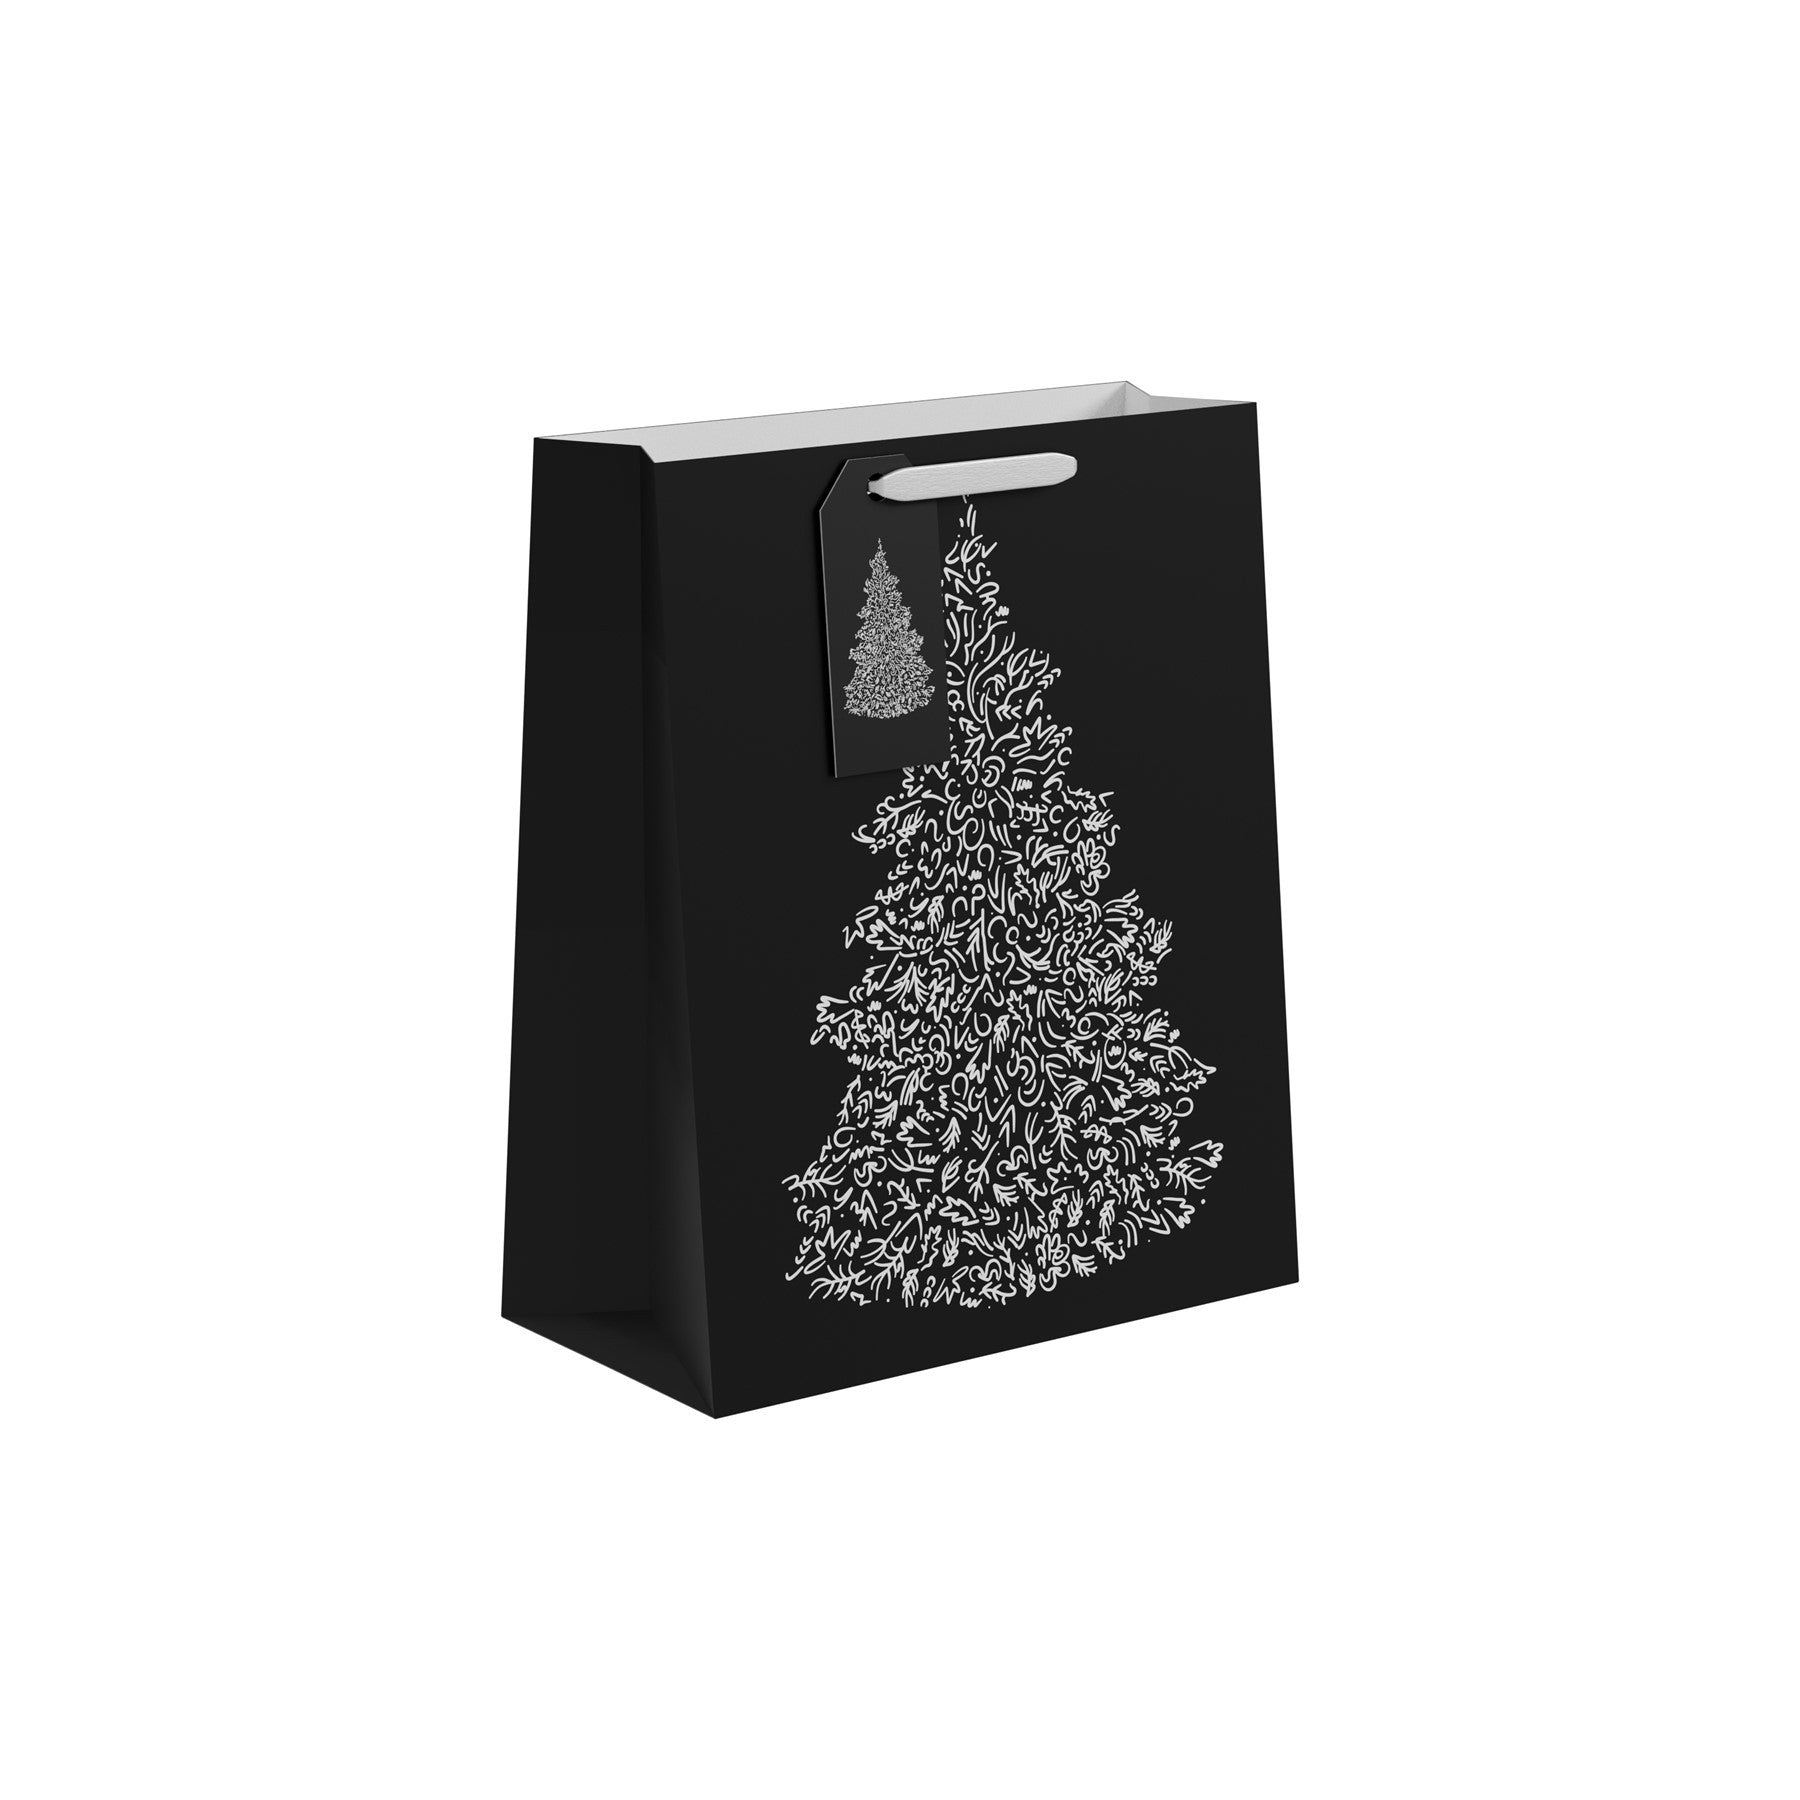 View Black White Christmas Tree Gift Bag Large information